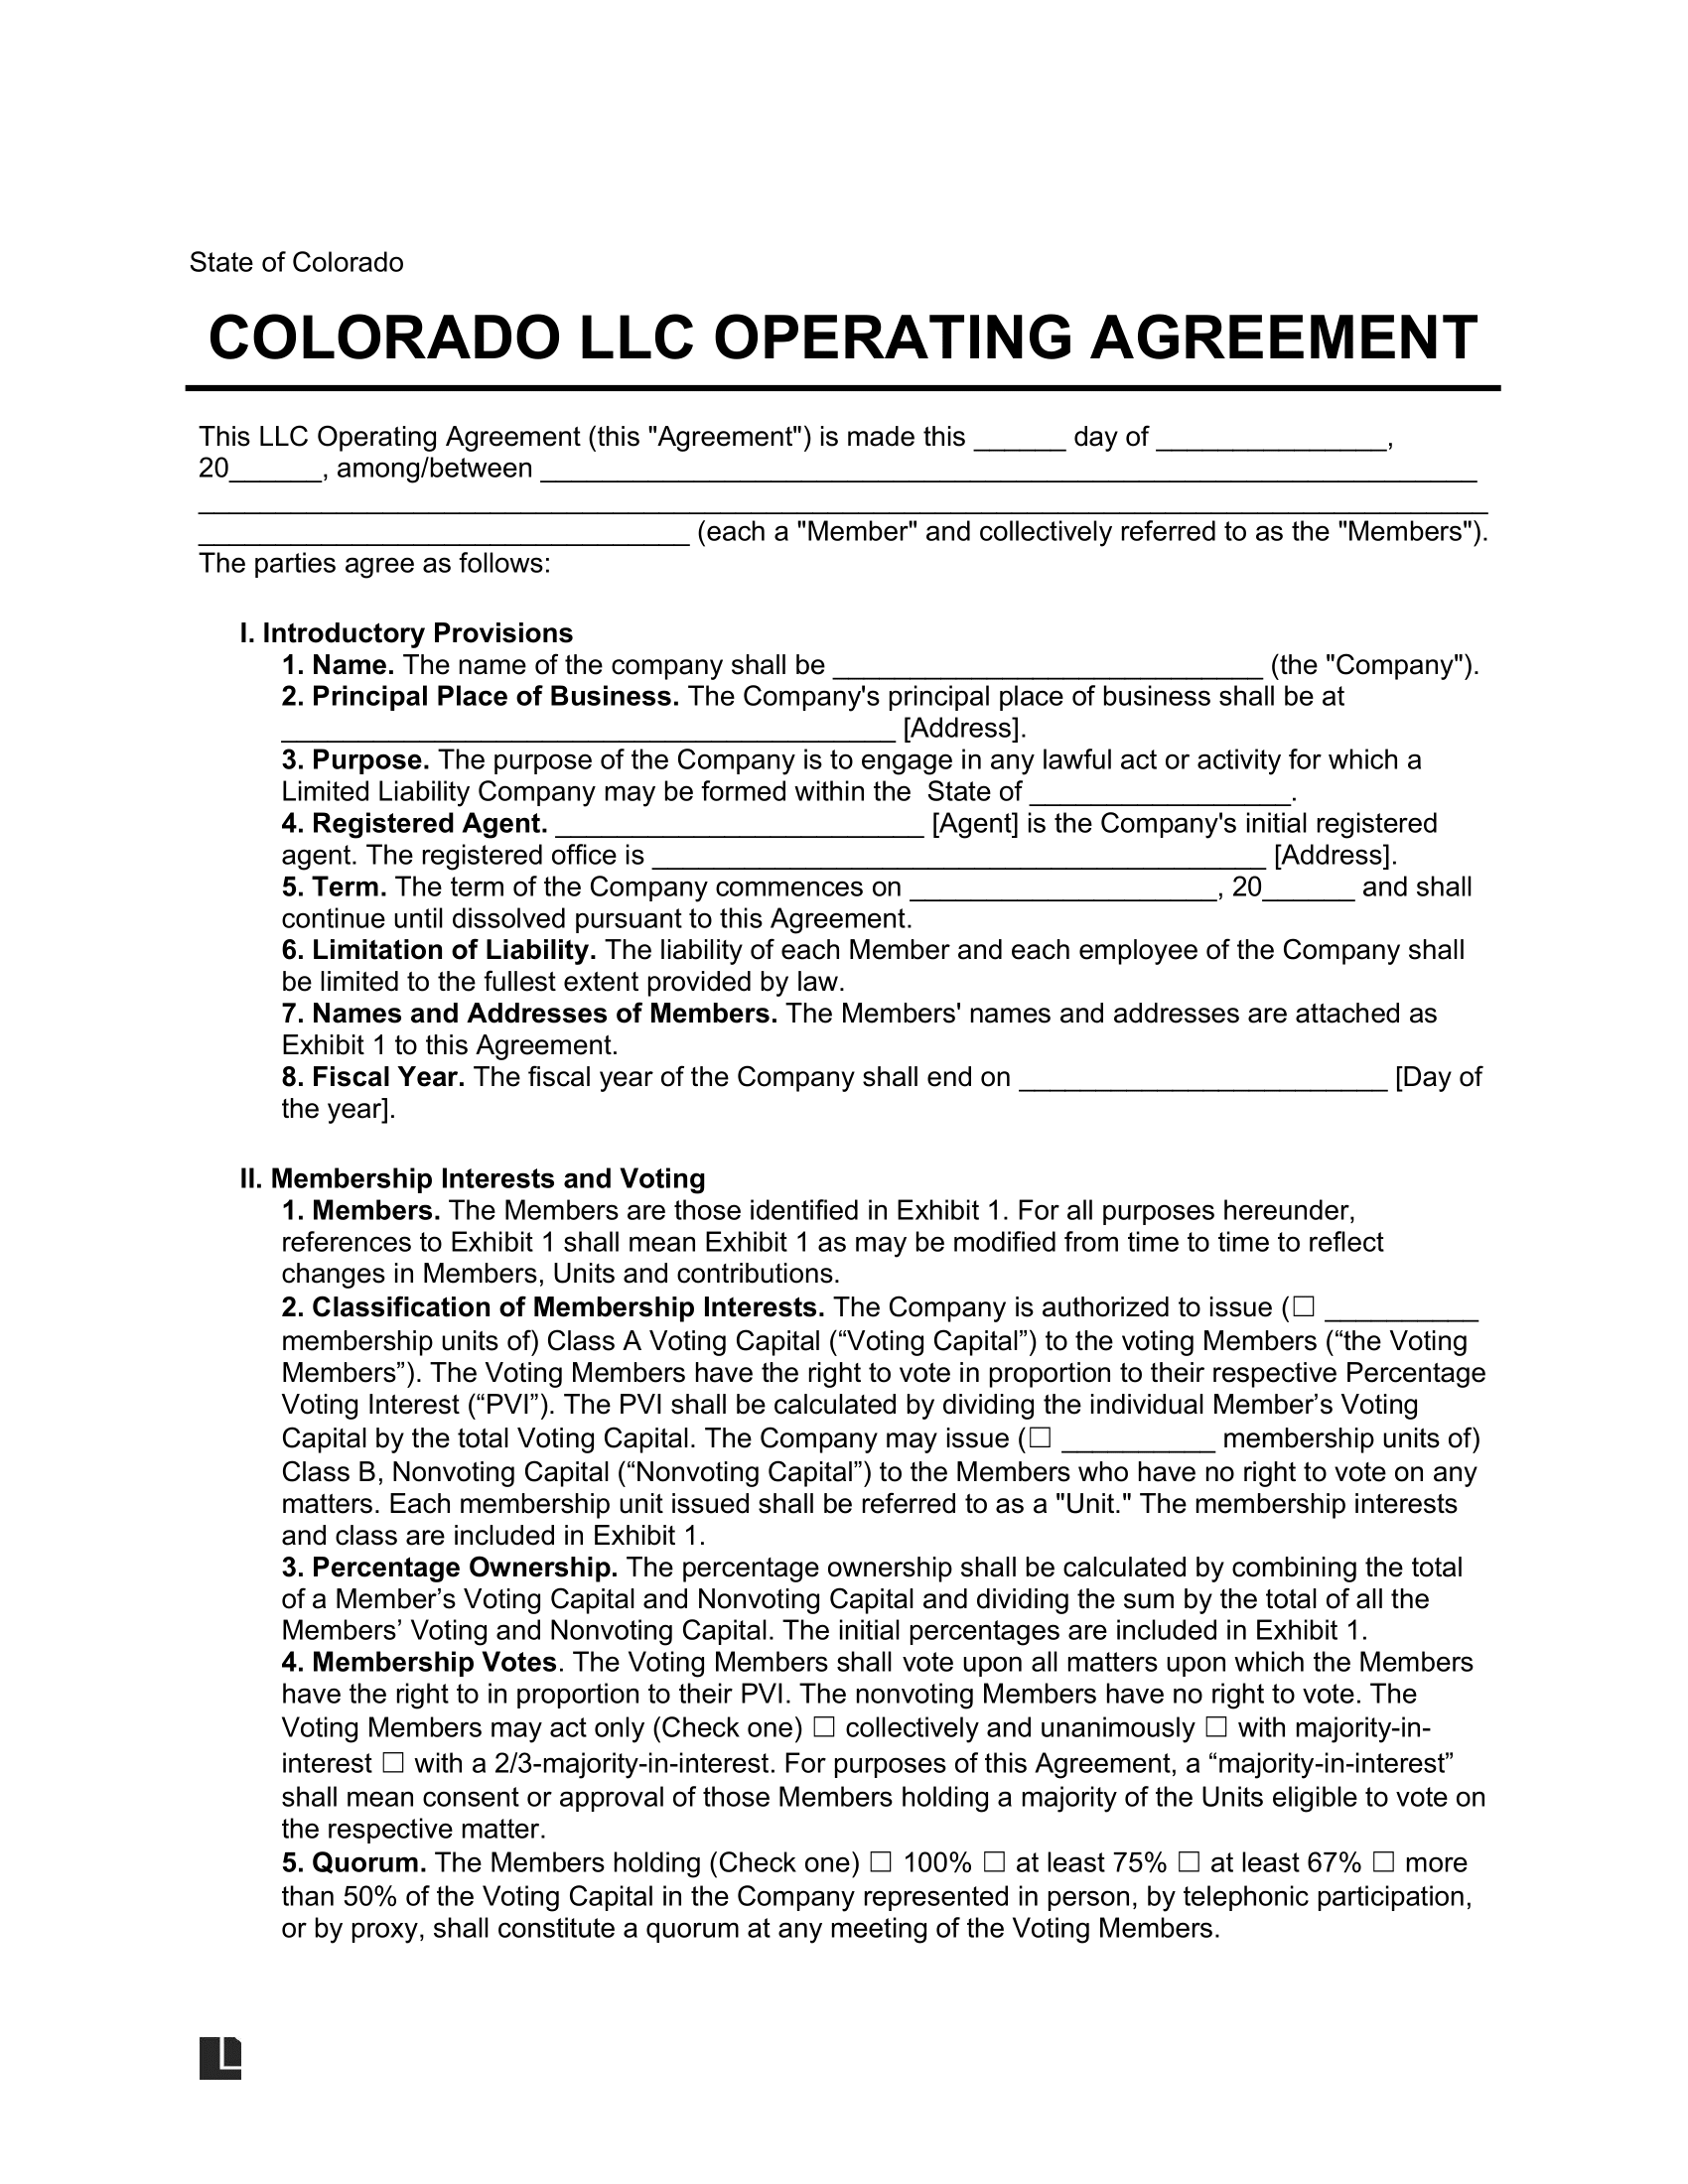 Colorado LLC Operating Agreement Template